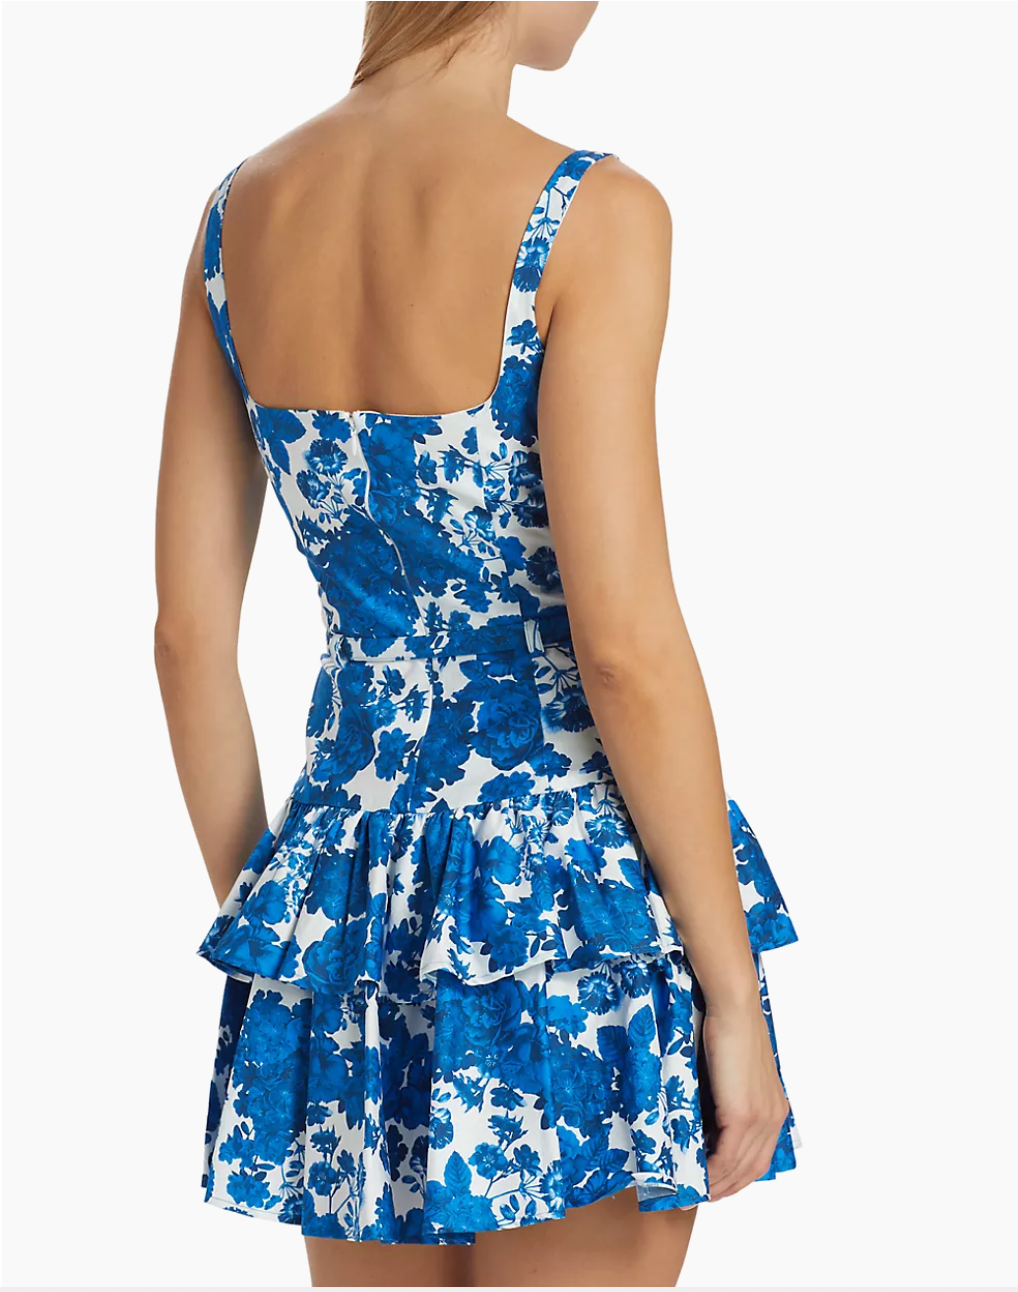 Cosette Dress in Blue Floral